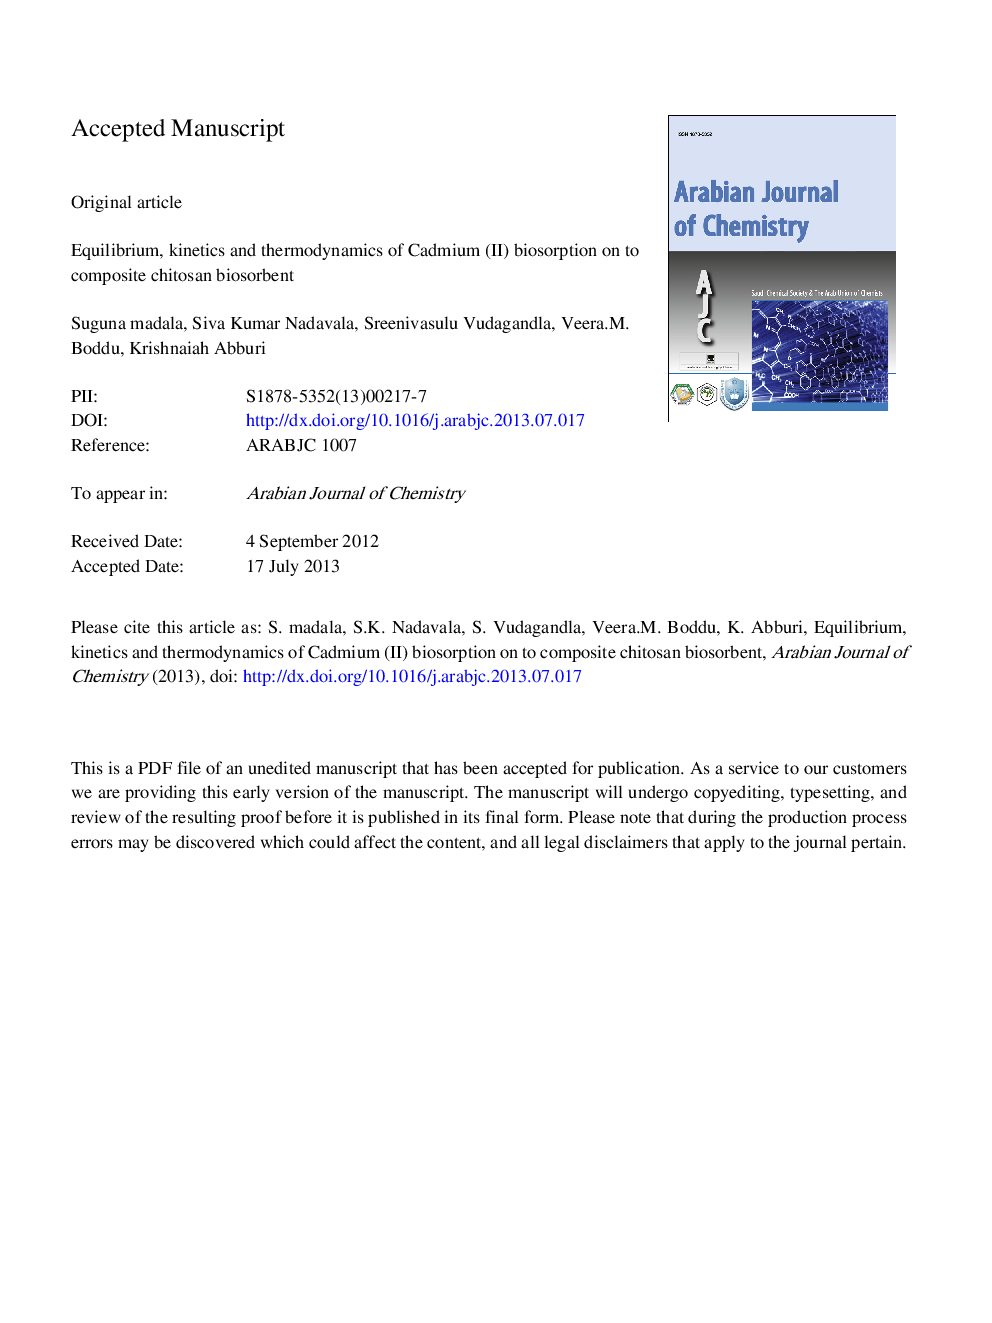 Equilibrium, kinetics and thermodynamics of Cadmium (II) biosorption on to composite chitosan biosorbent